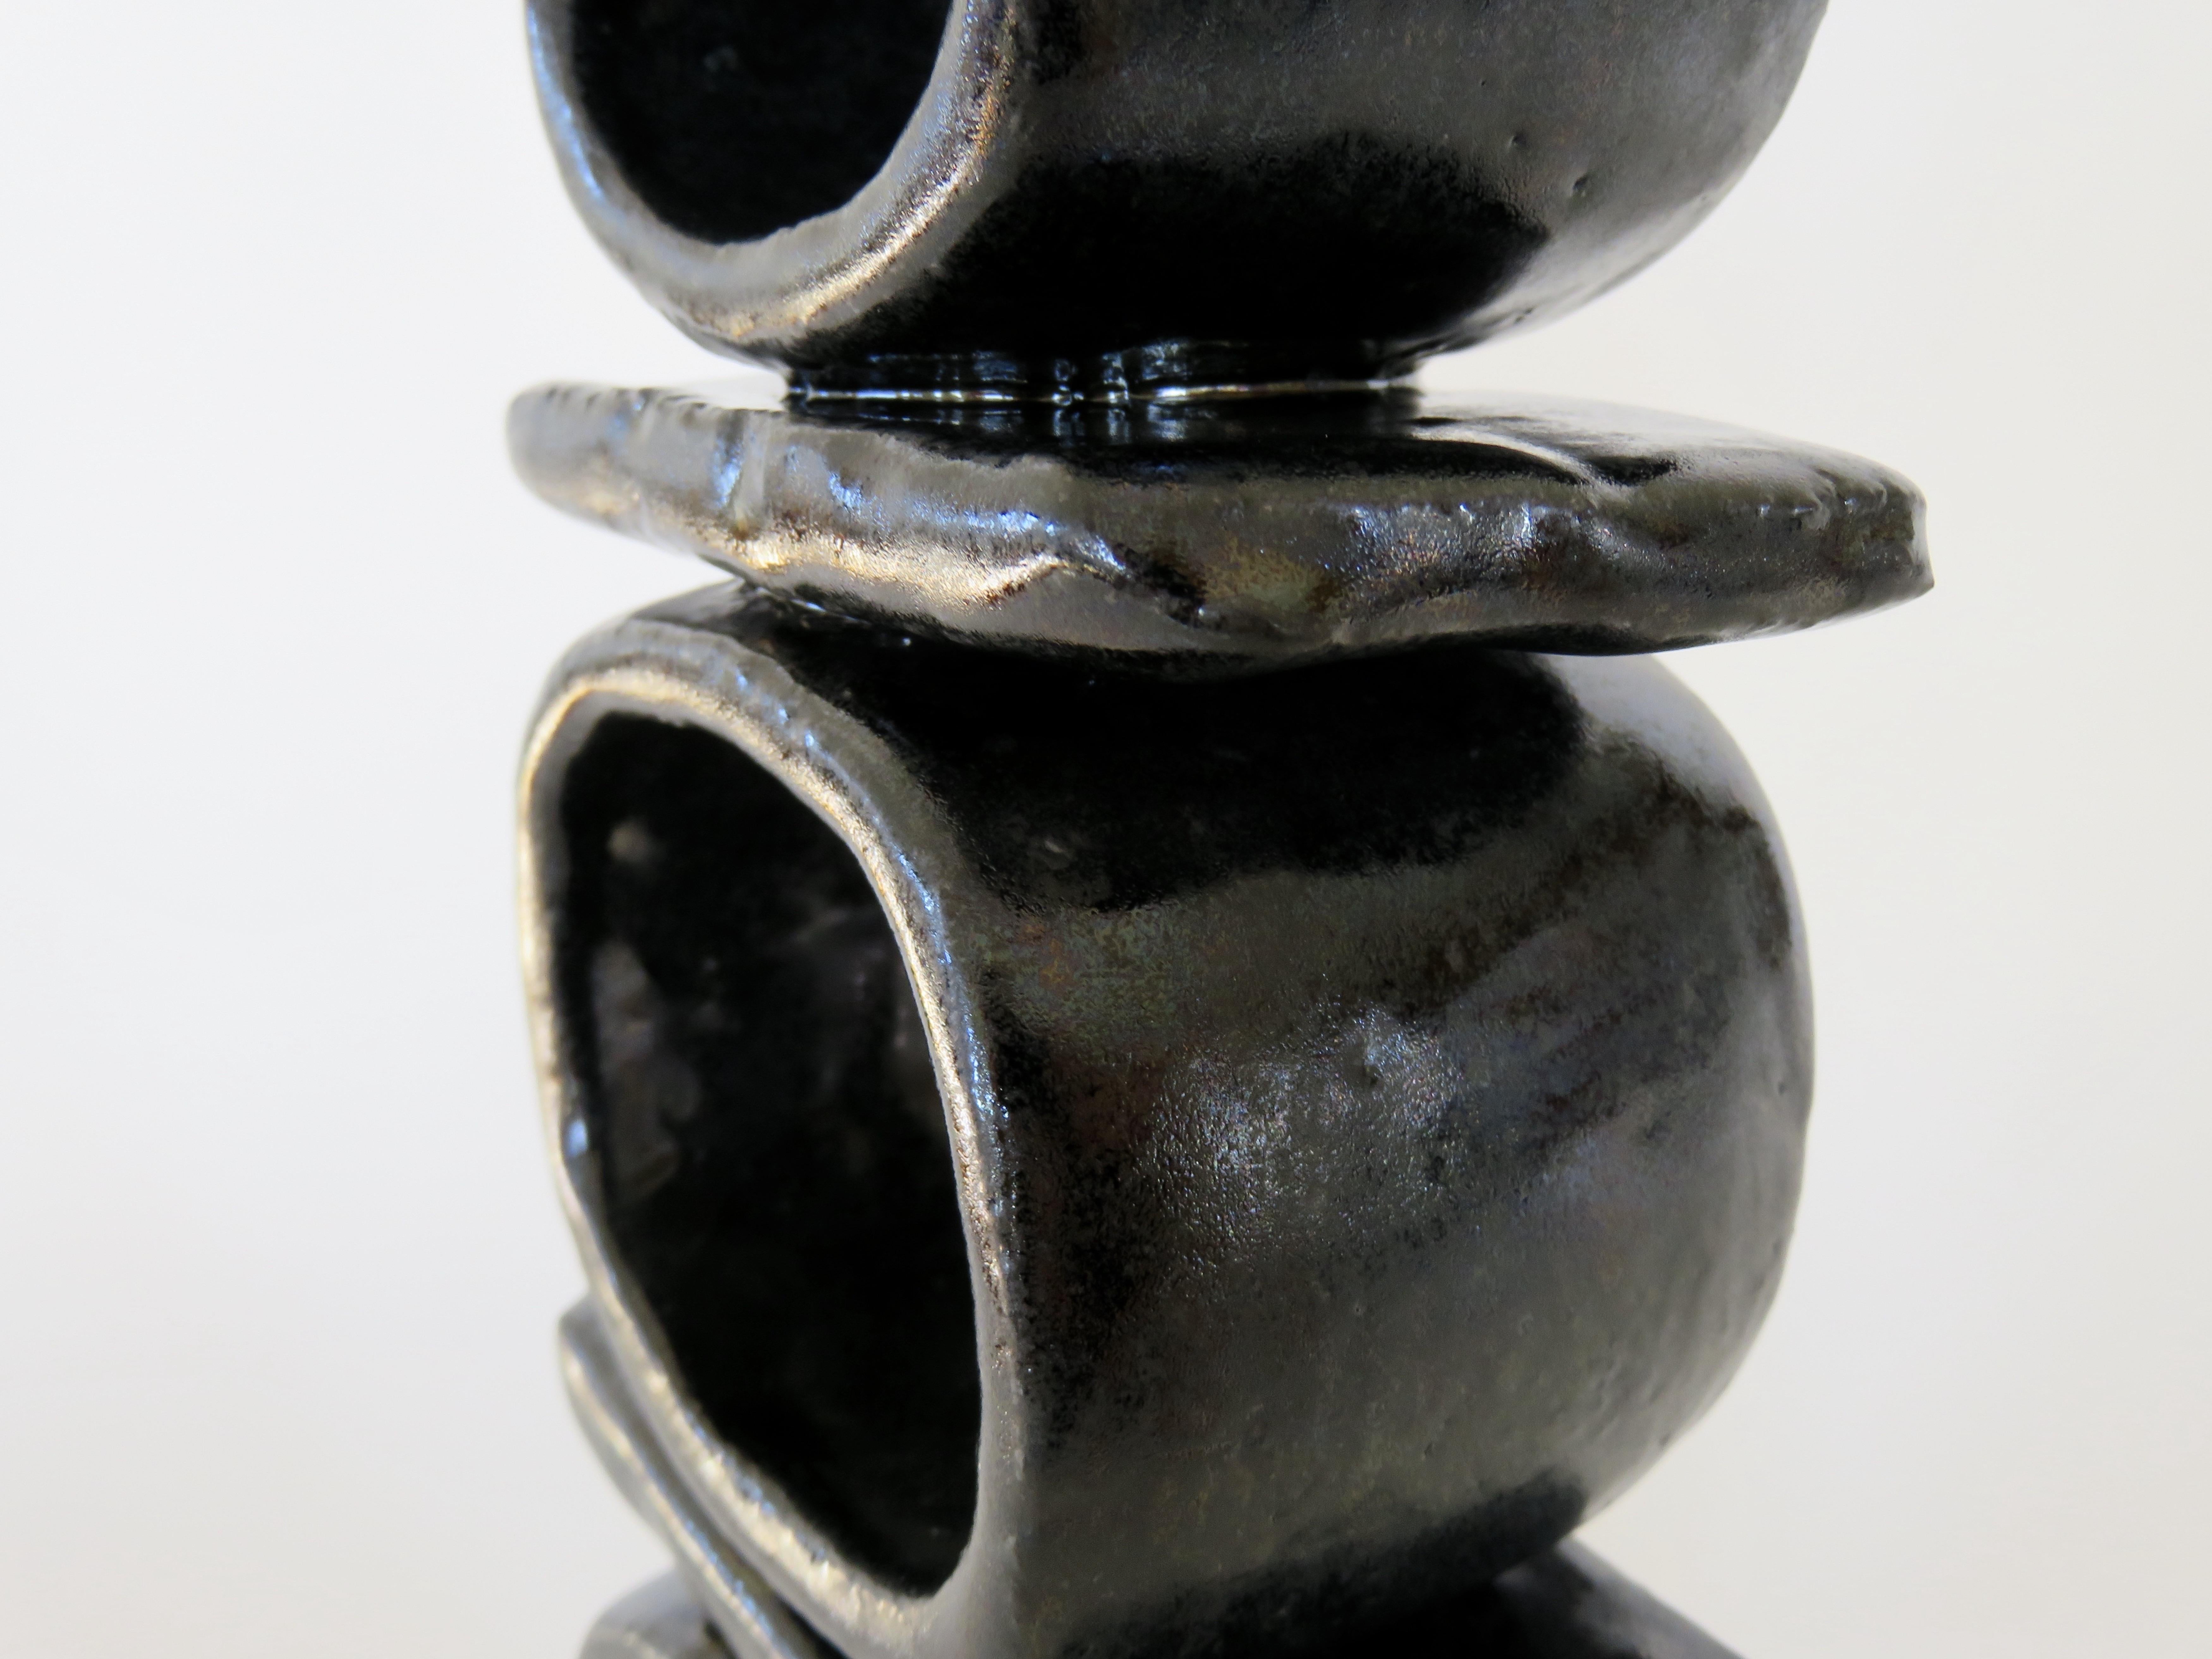 Glazed Stacked Rings and Bars, Handbuilt Shiny Black Totemic Ceramic Sculpture